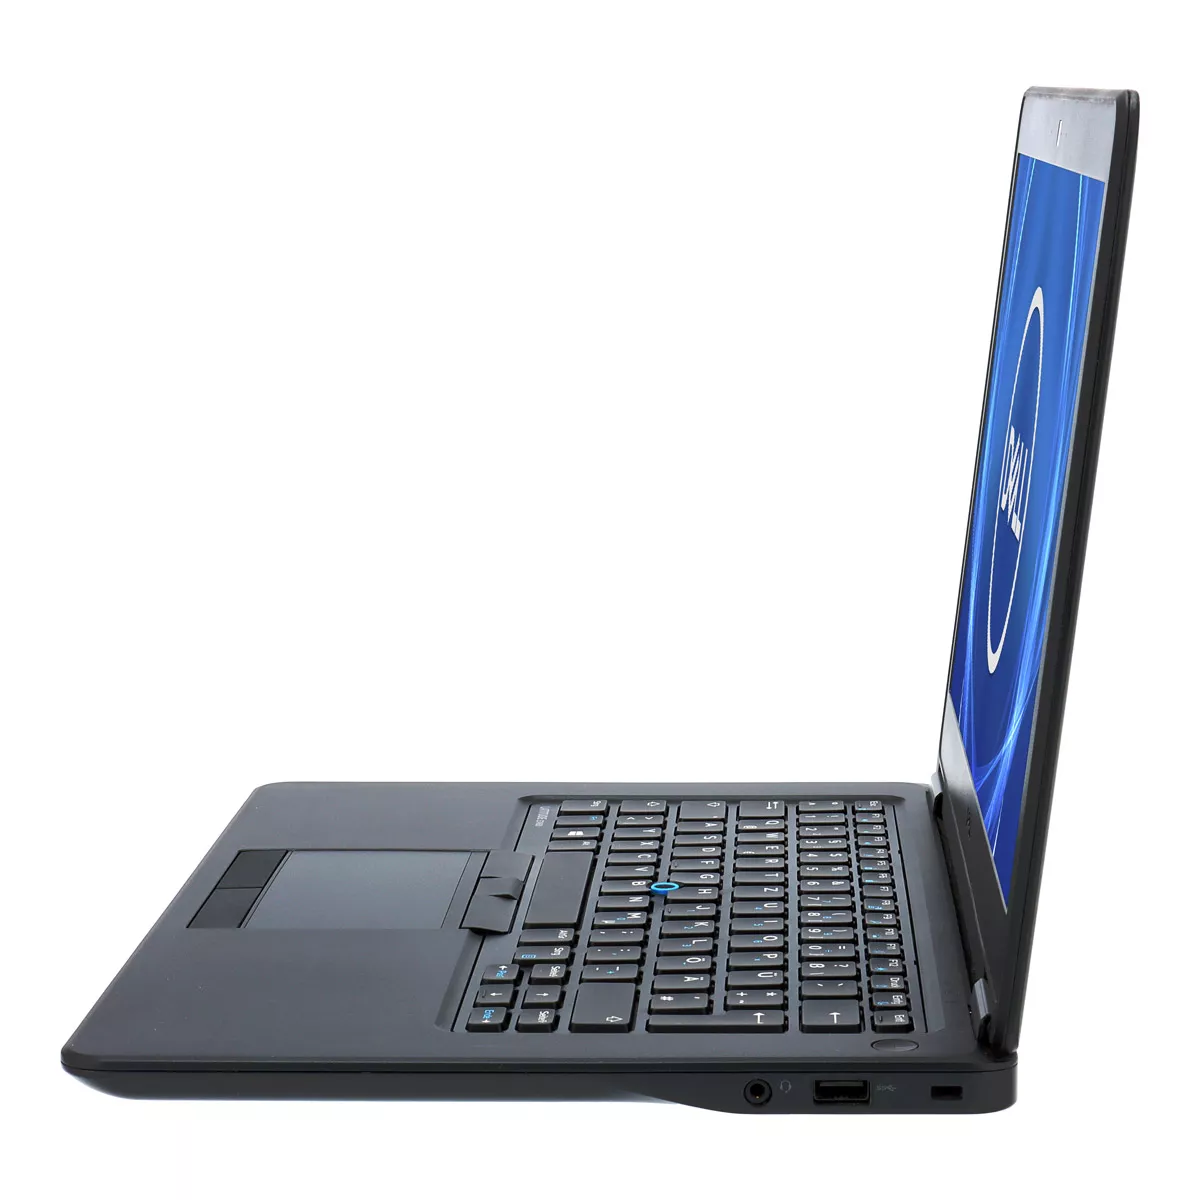 Dell Latitude E7450 Core i7 5600U nVidia Geforce 840M 2,0 GB Full-HD 240 GB SSD Webcam B